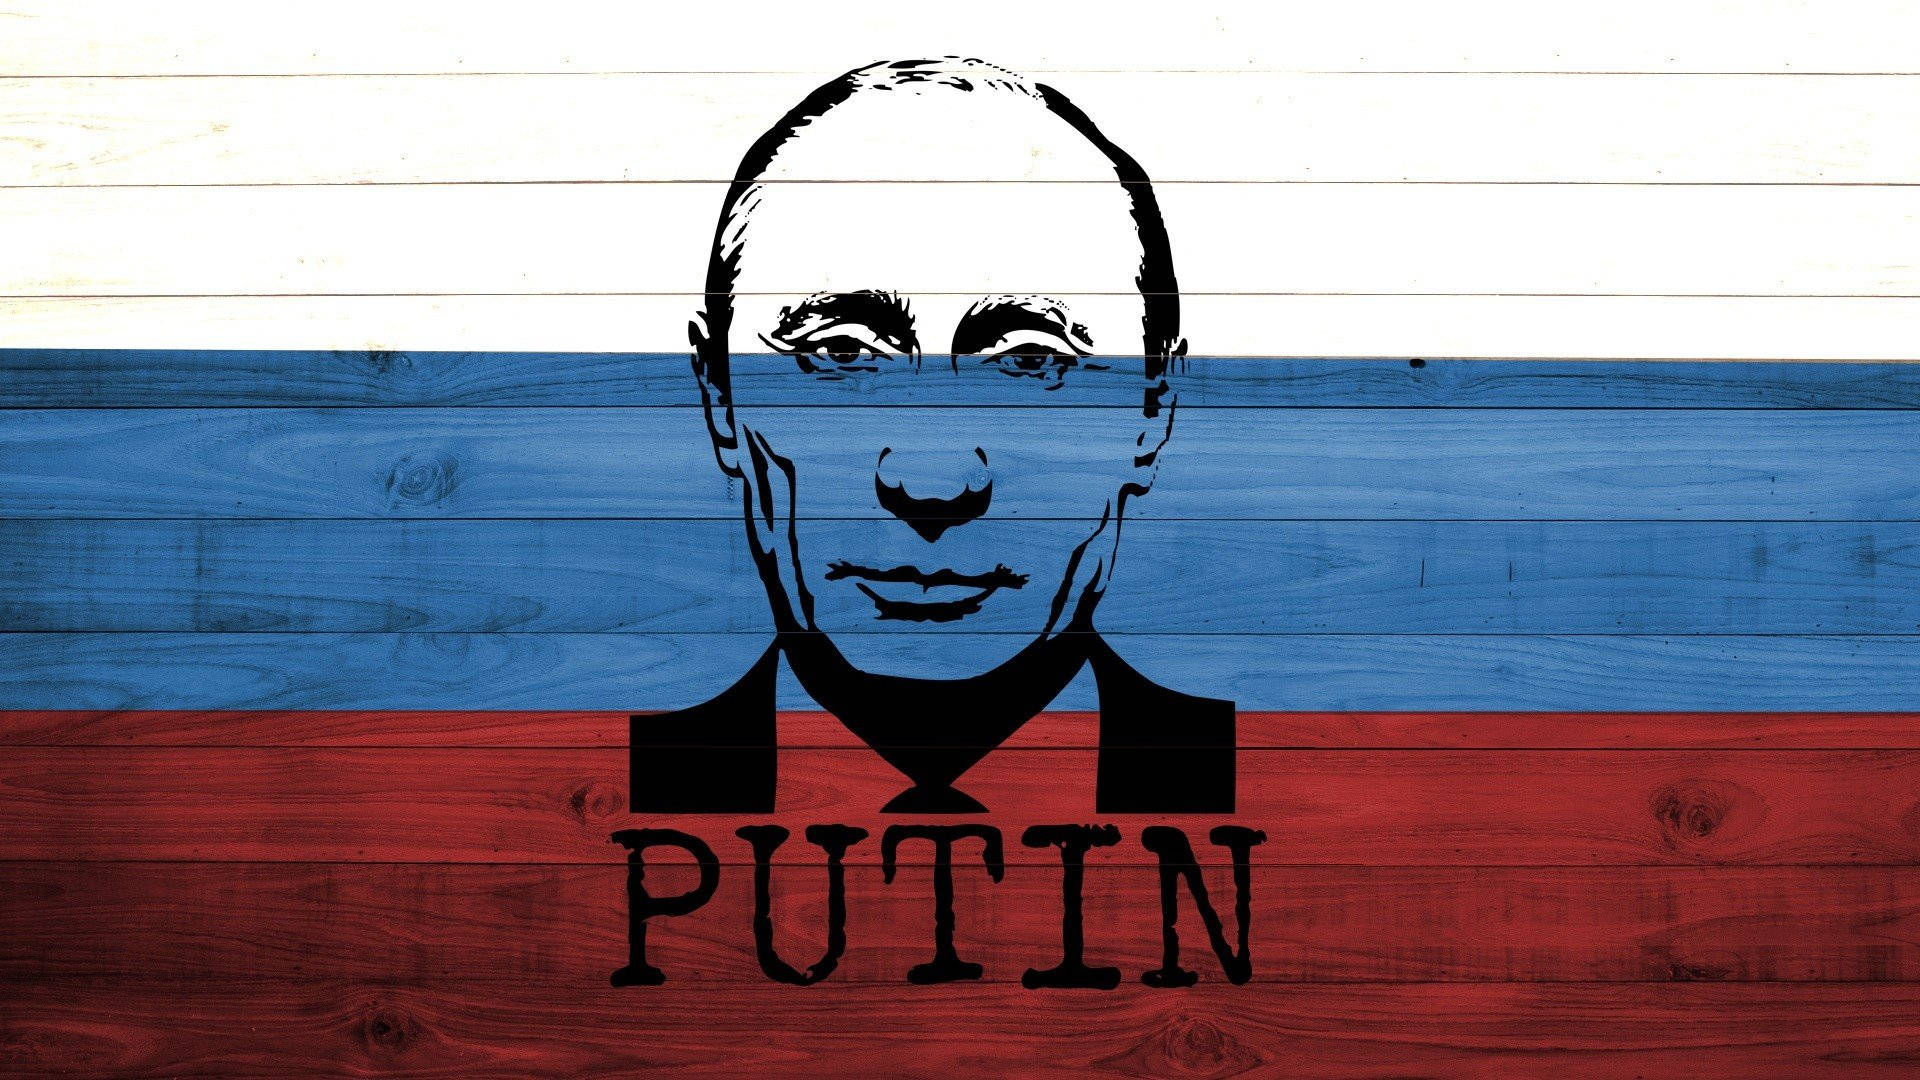 Russia President Putin Background